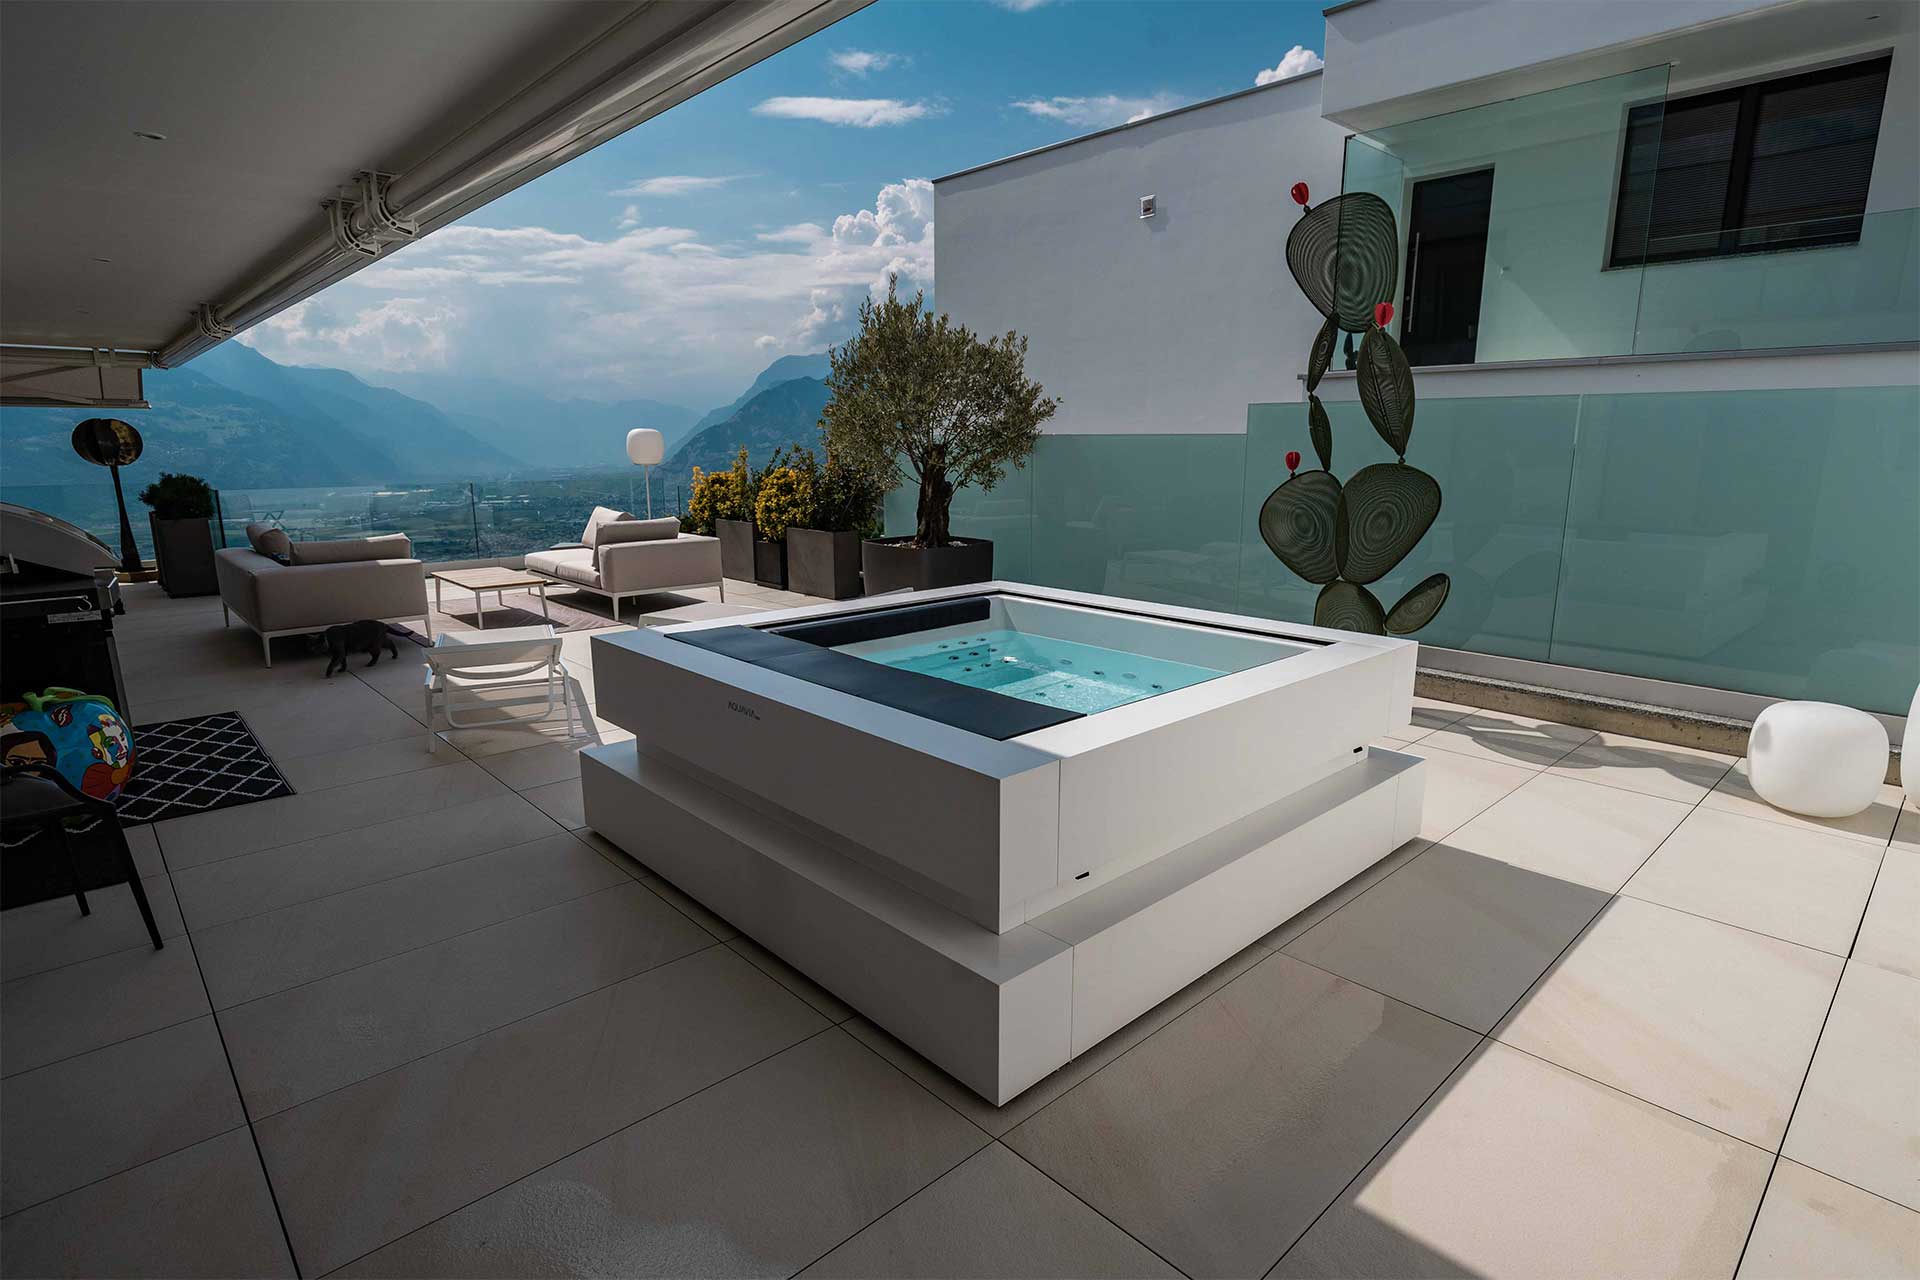 Aquavia rigid outdoor spa in an idyllic setting